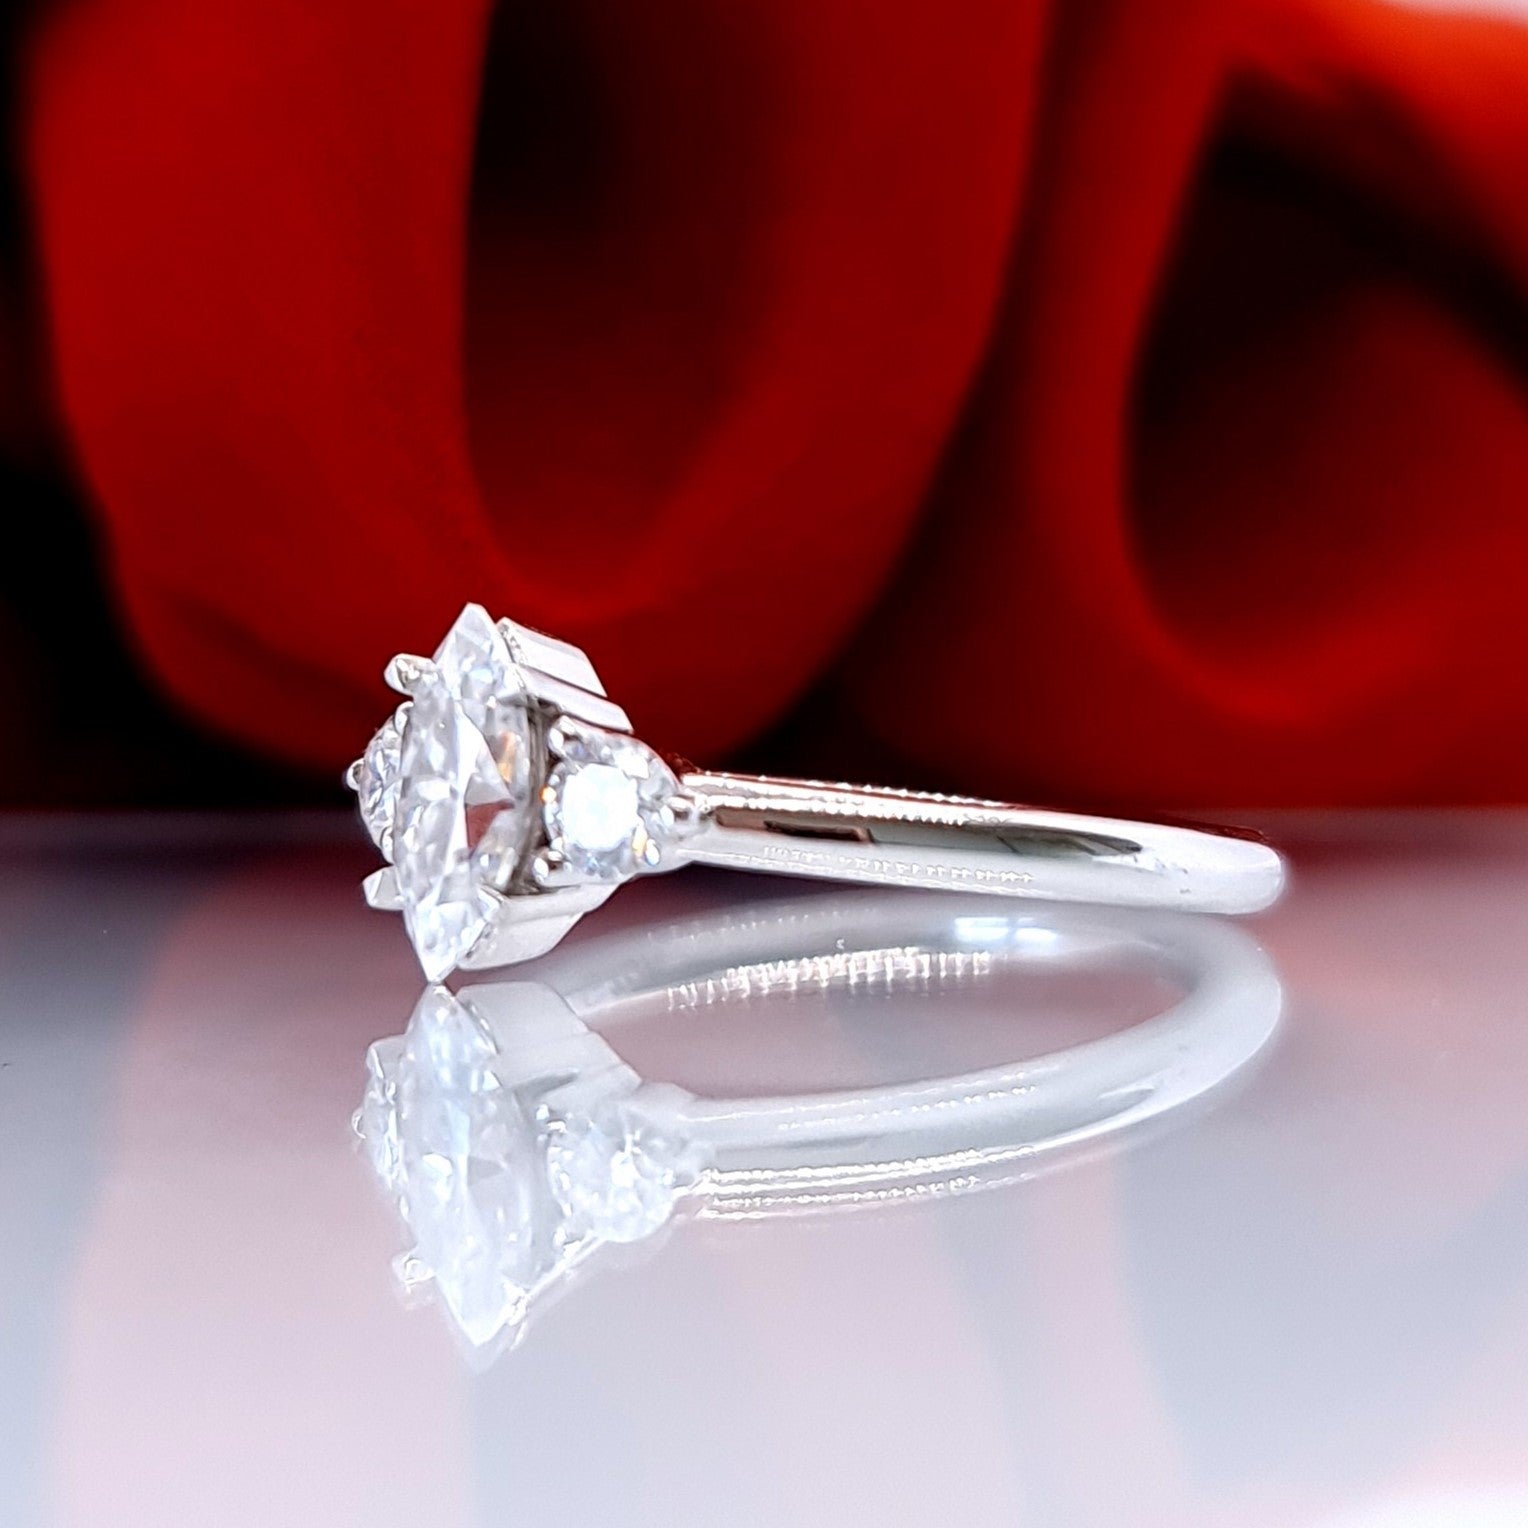 1 carat marquise cut Moissanite Engagement Ring - Sustainable Diamond Alternative Fast next day shipping Sydney Australia Lifetime warranty